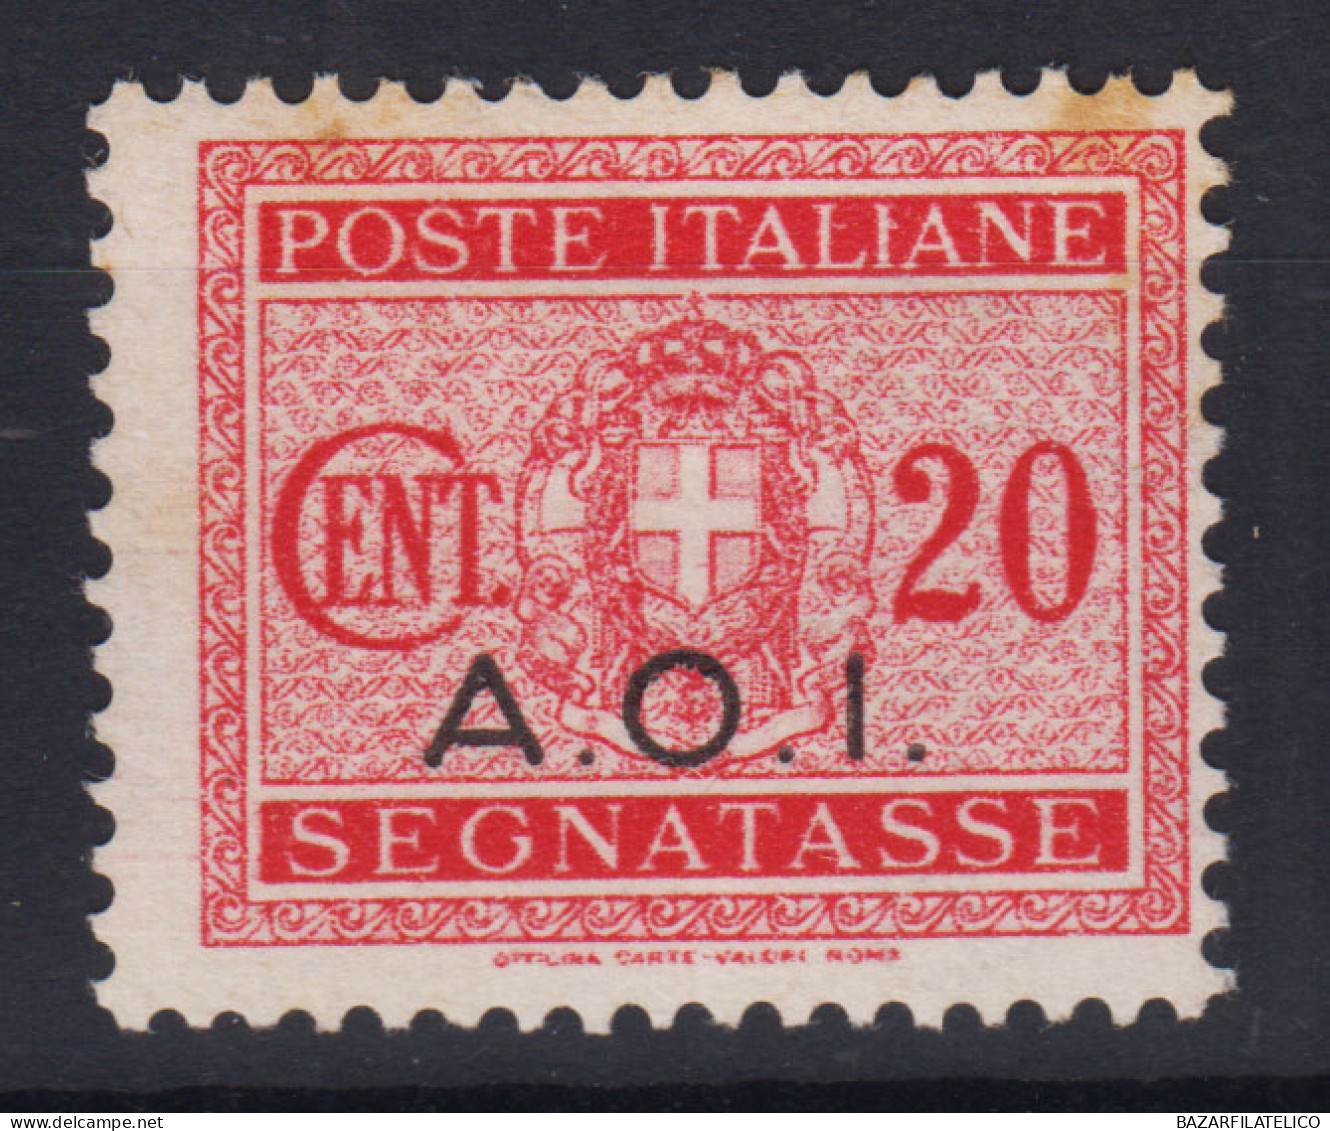 COLONIE AFRICA ORIENTALE ITALIANA 1939-40 SEGNATASSE 20 CENTESIMI N.3 G.O MH* - Afrique Orientale Italienne